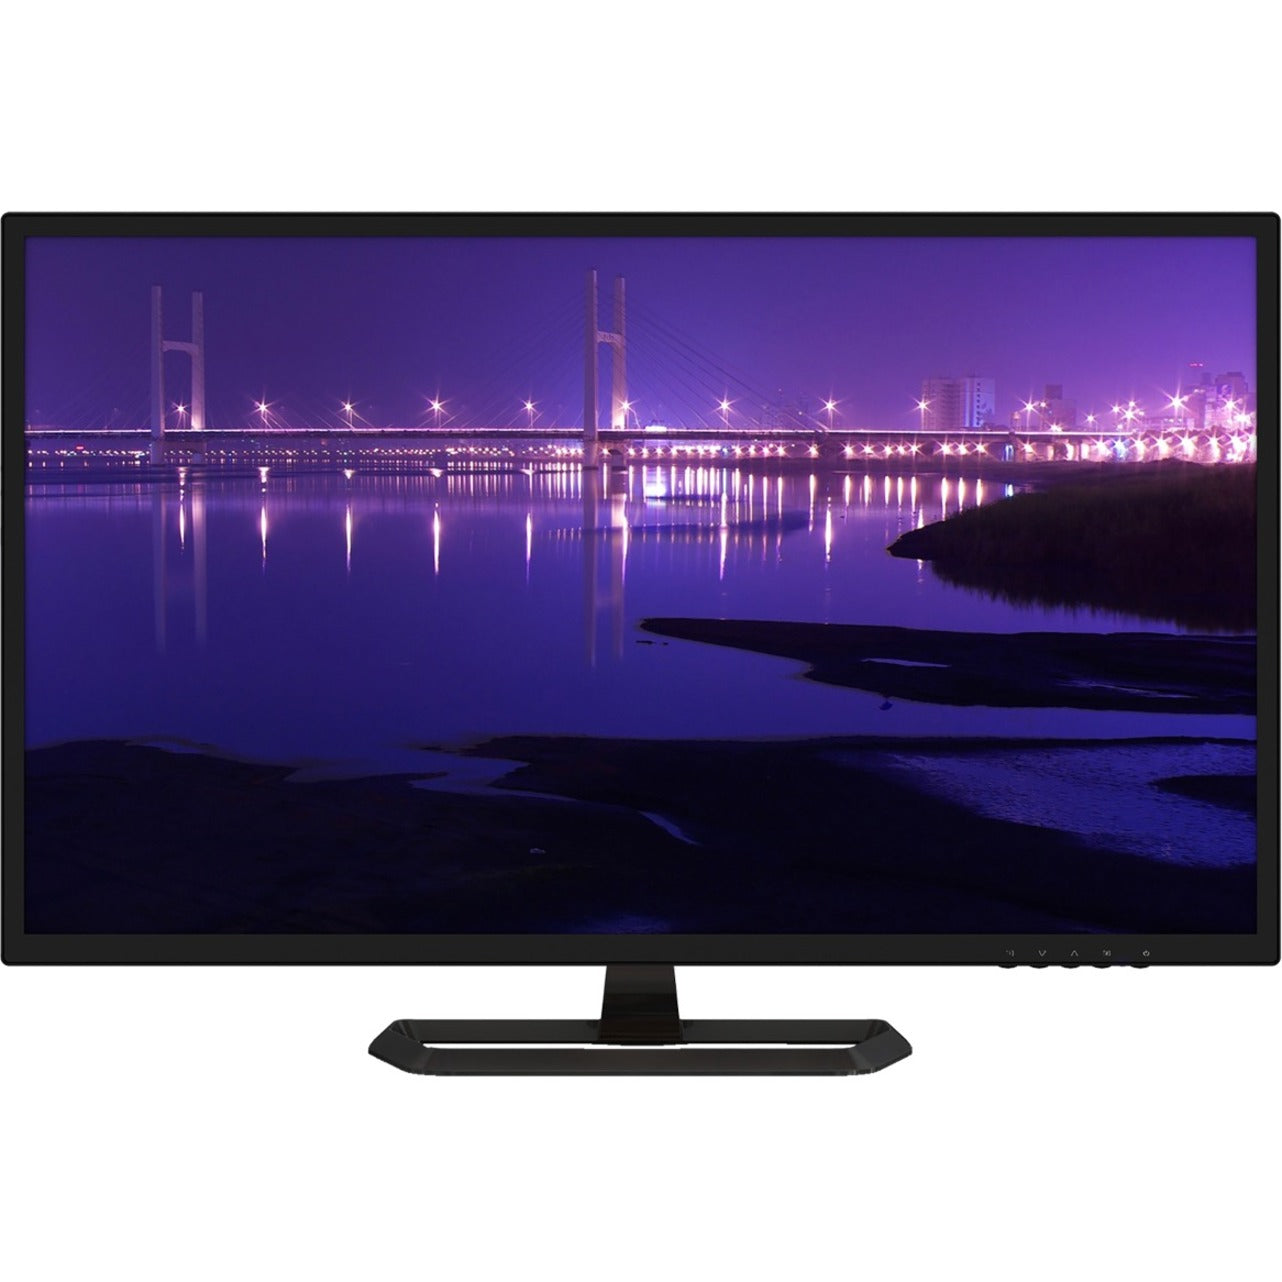 Planar 997-8425-01 PXL3280W 31.5 WQHD LCD Monitor, 1.07 Billion Colors, 2560 x 1440, 3 Year Warranty